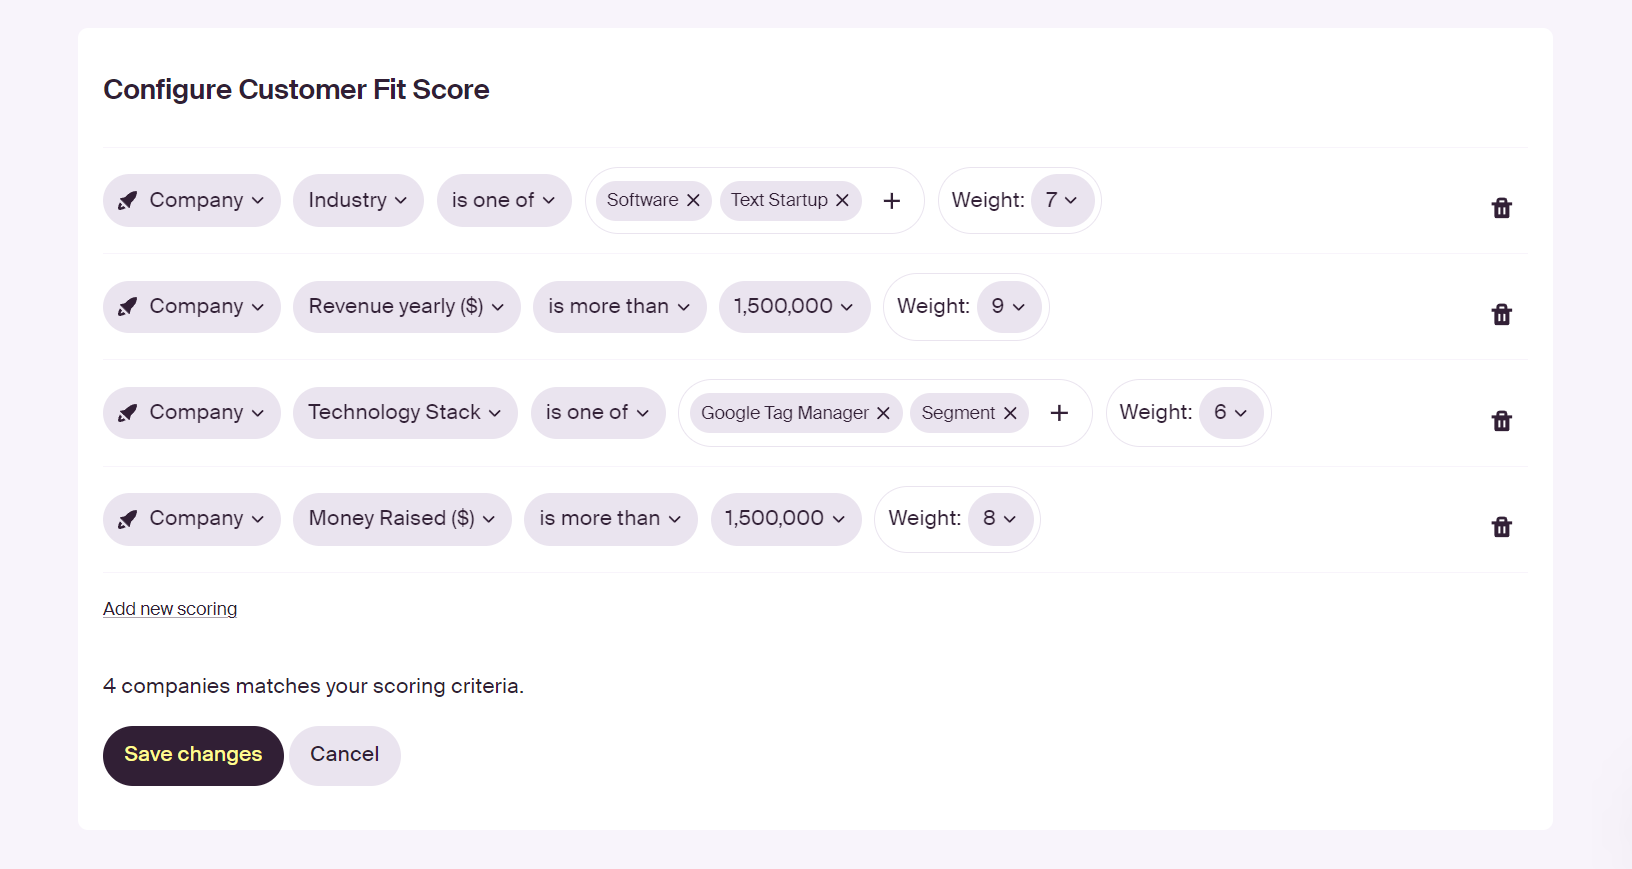 Breyta tool screenshot showing customer fit score configuration